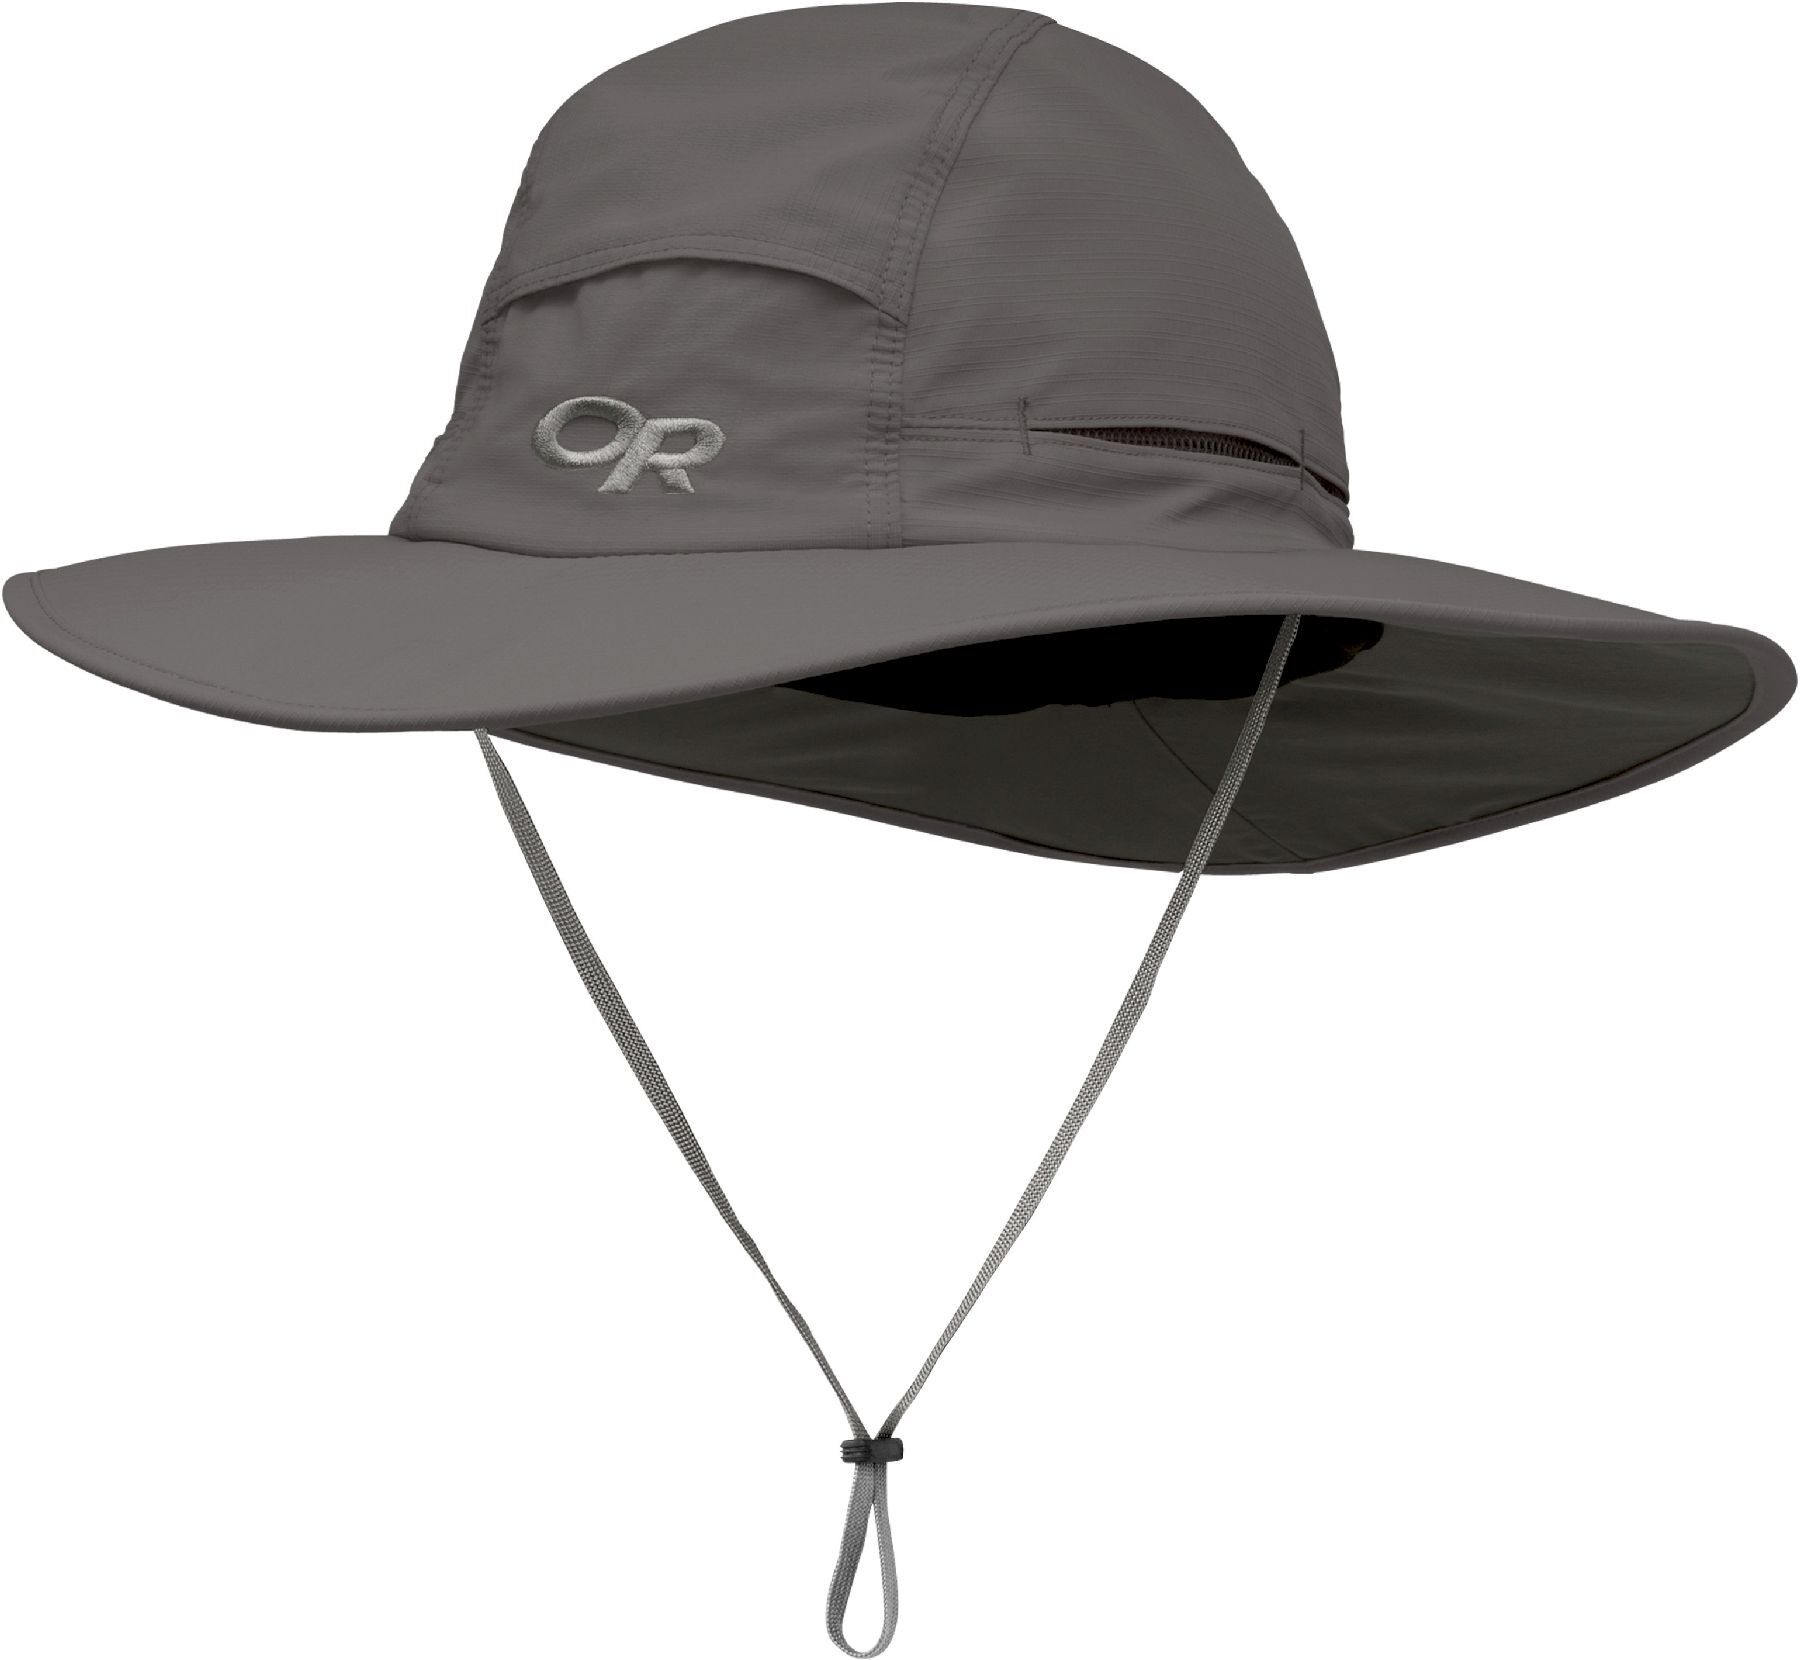 Outdoor Research Sombriolet Sun Hat - Hat